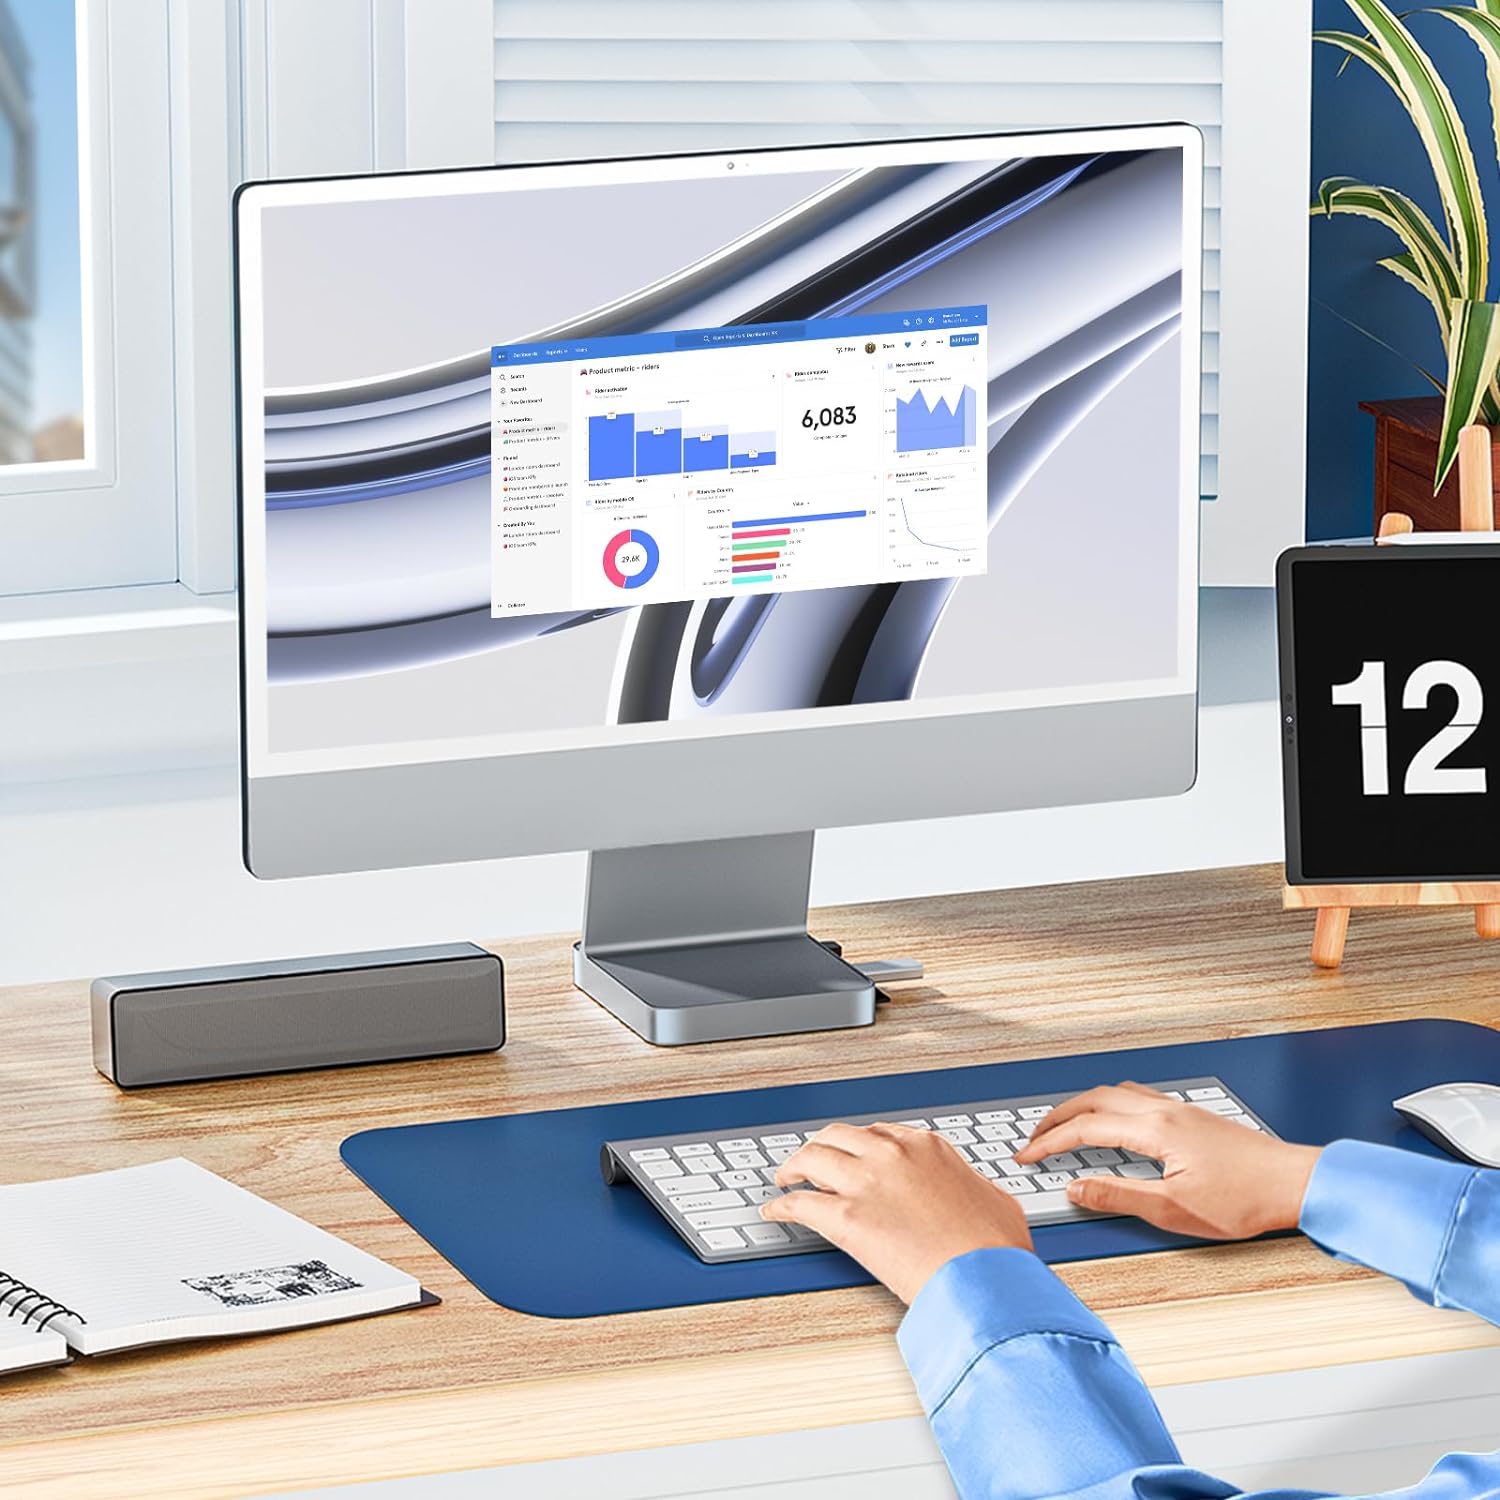 10Gbps USB C Docking Station For 24" iMac M3【Sliver】|DS802-S